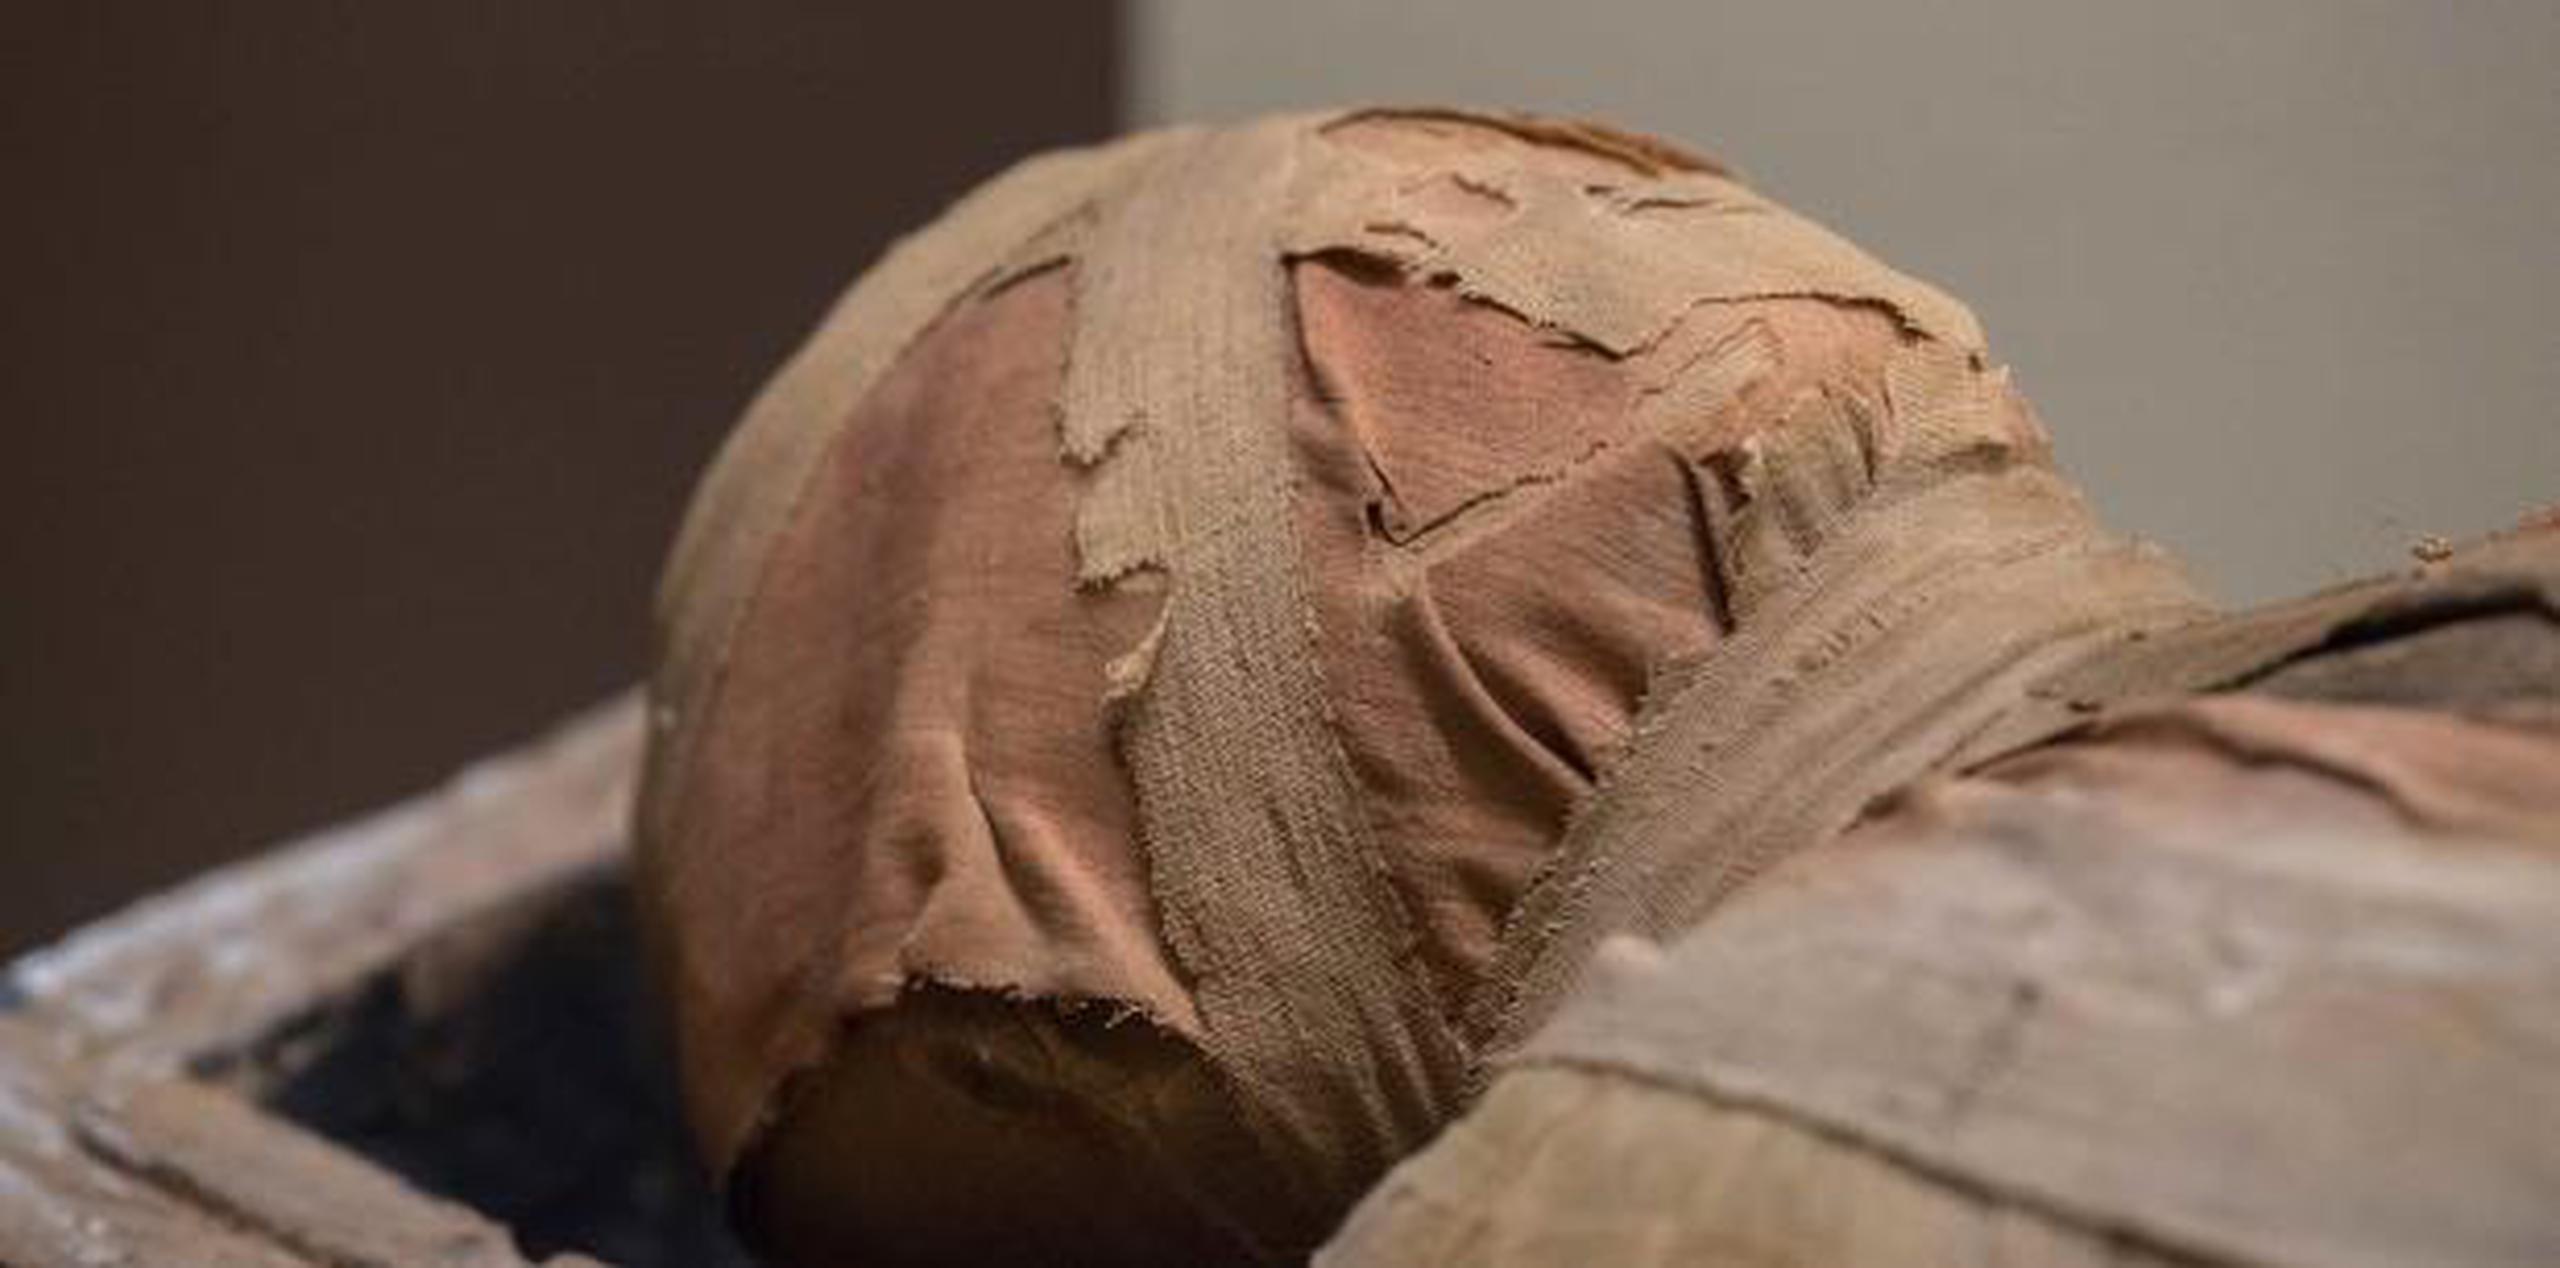 Las reliquias aparentemente salieron de Egipto de manera ilegal. (Shutterstock)